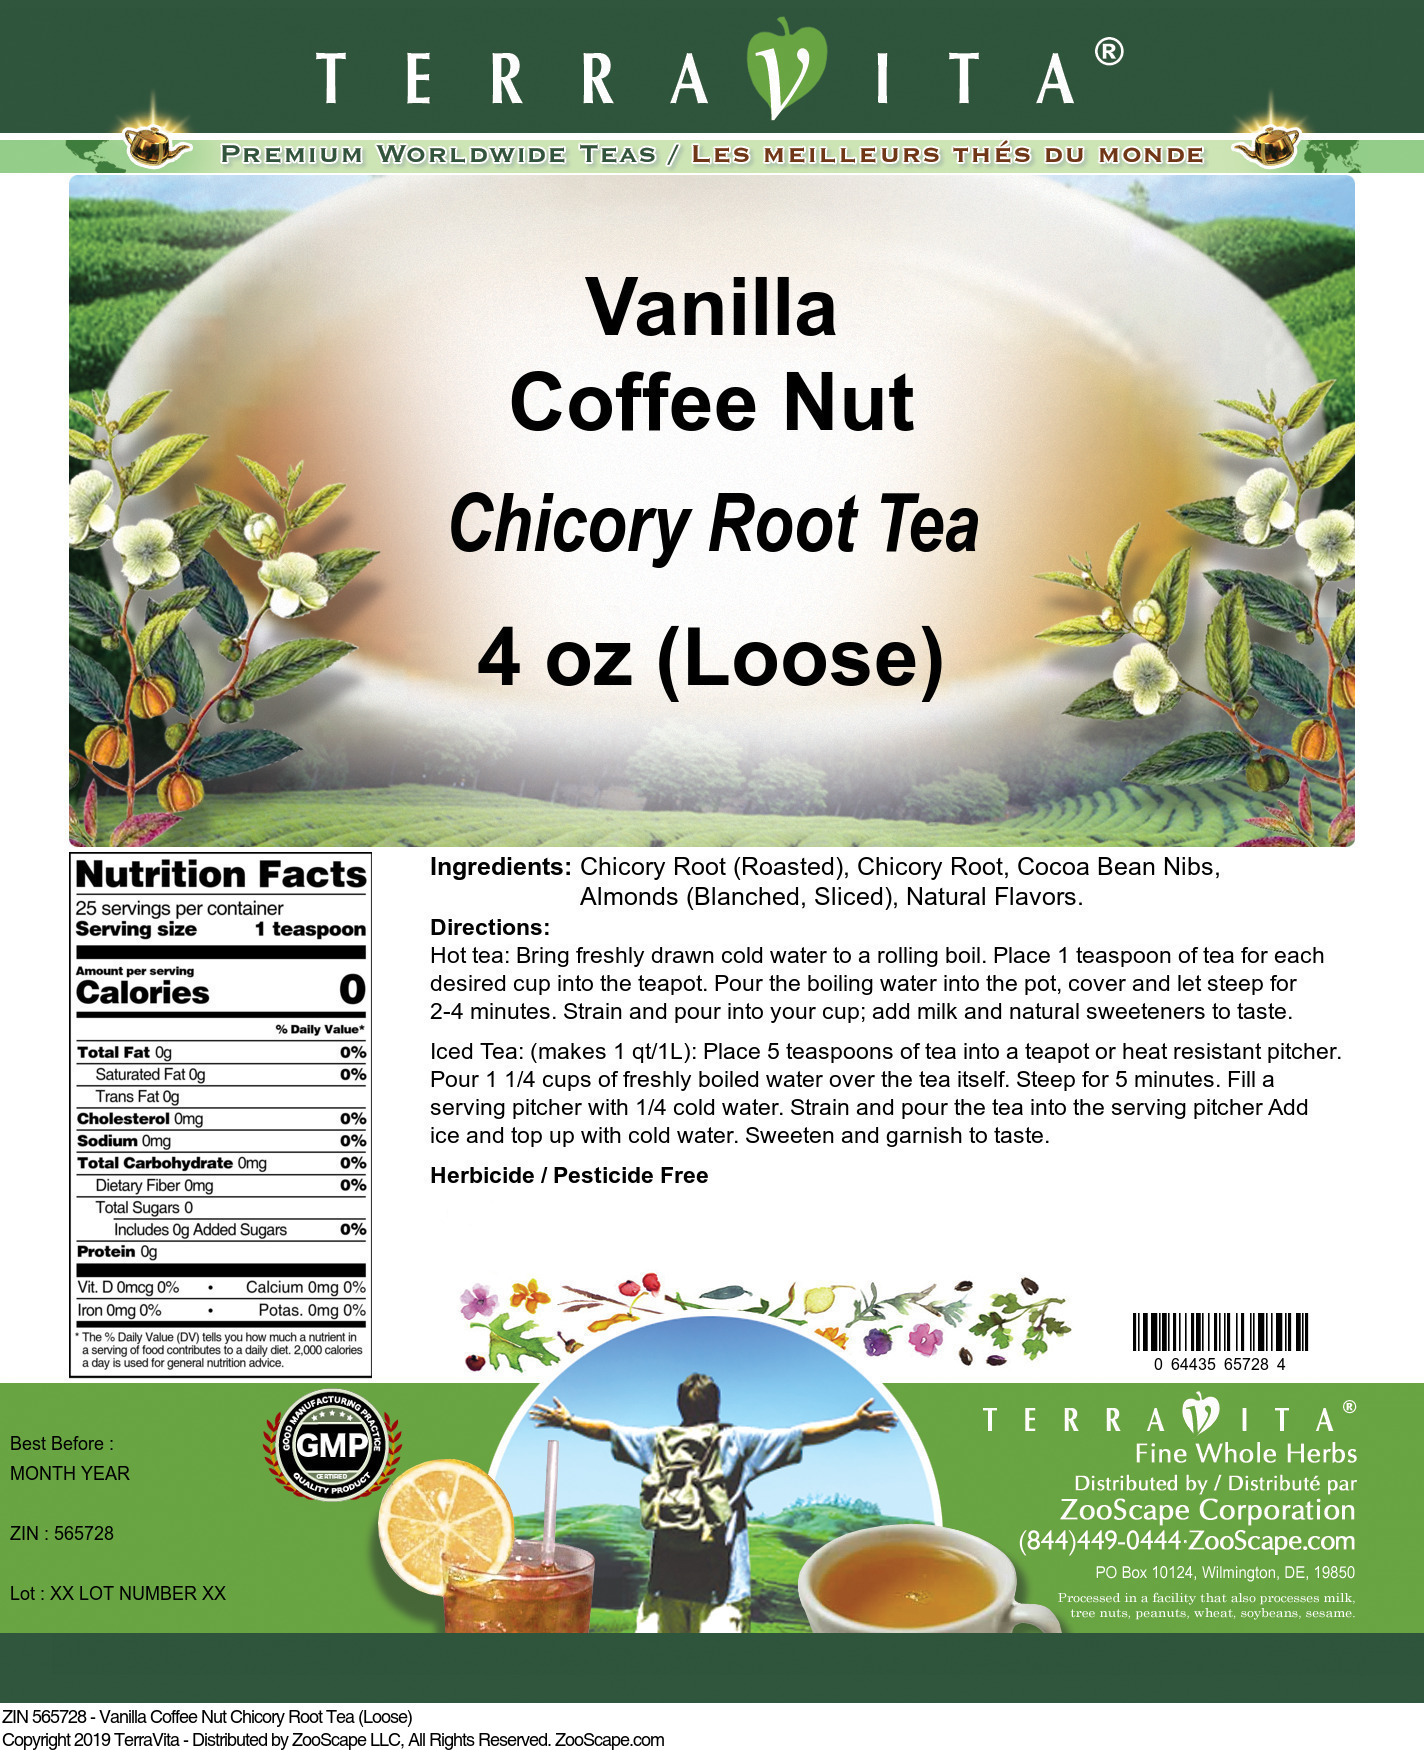 Vanilla Coffee Nut Chicory Root Tea (Loose) - Label